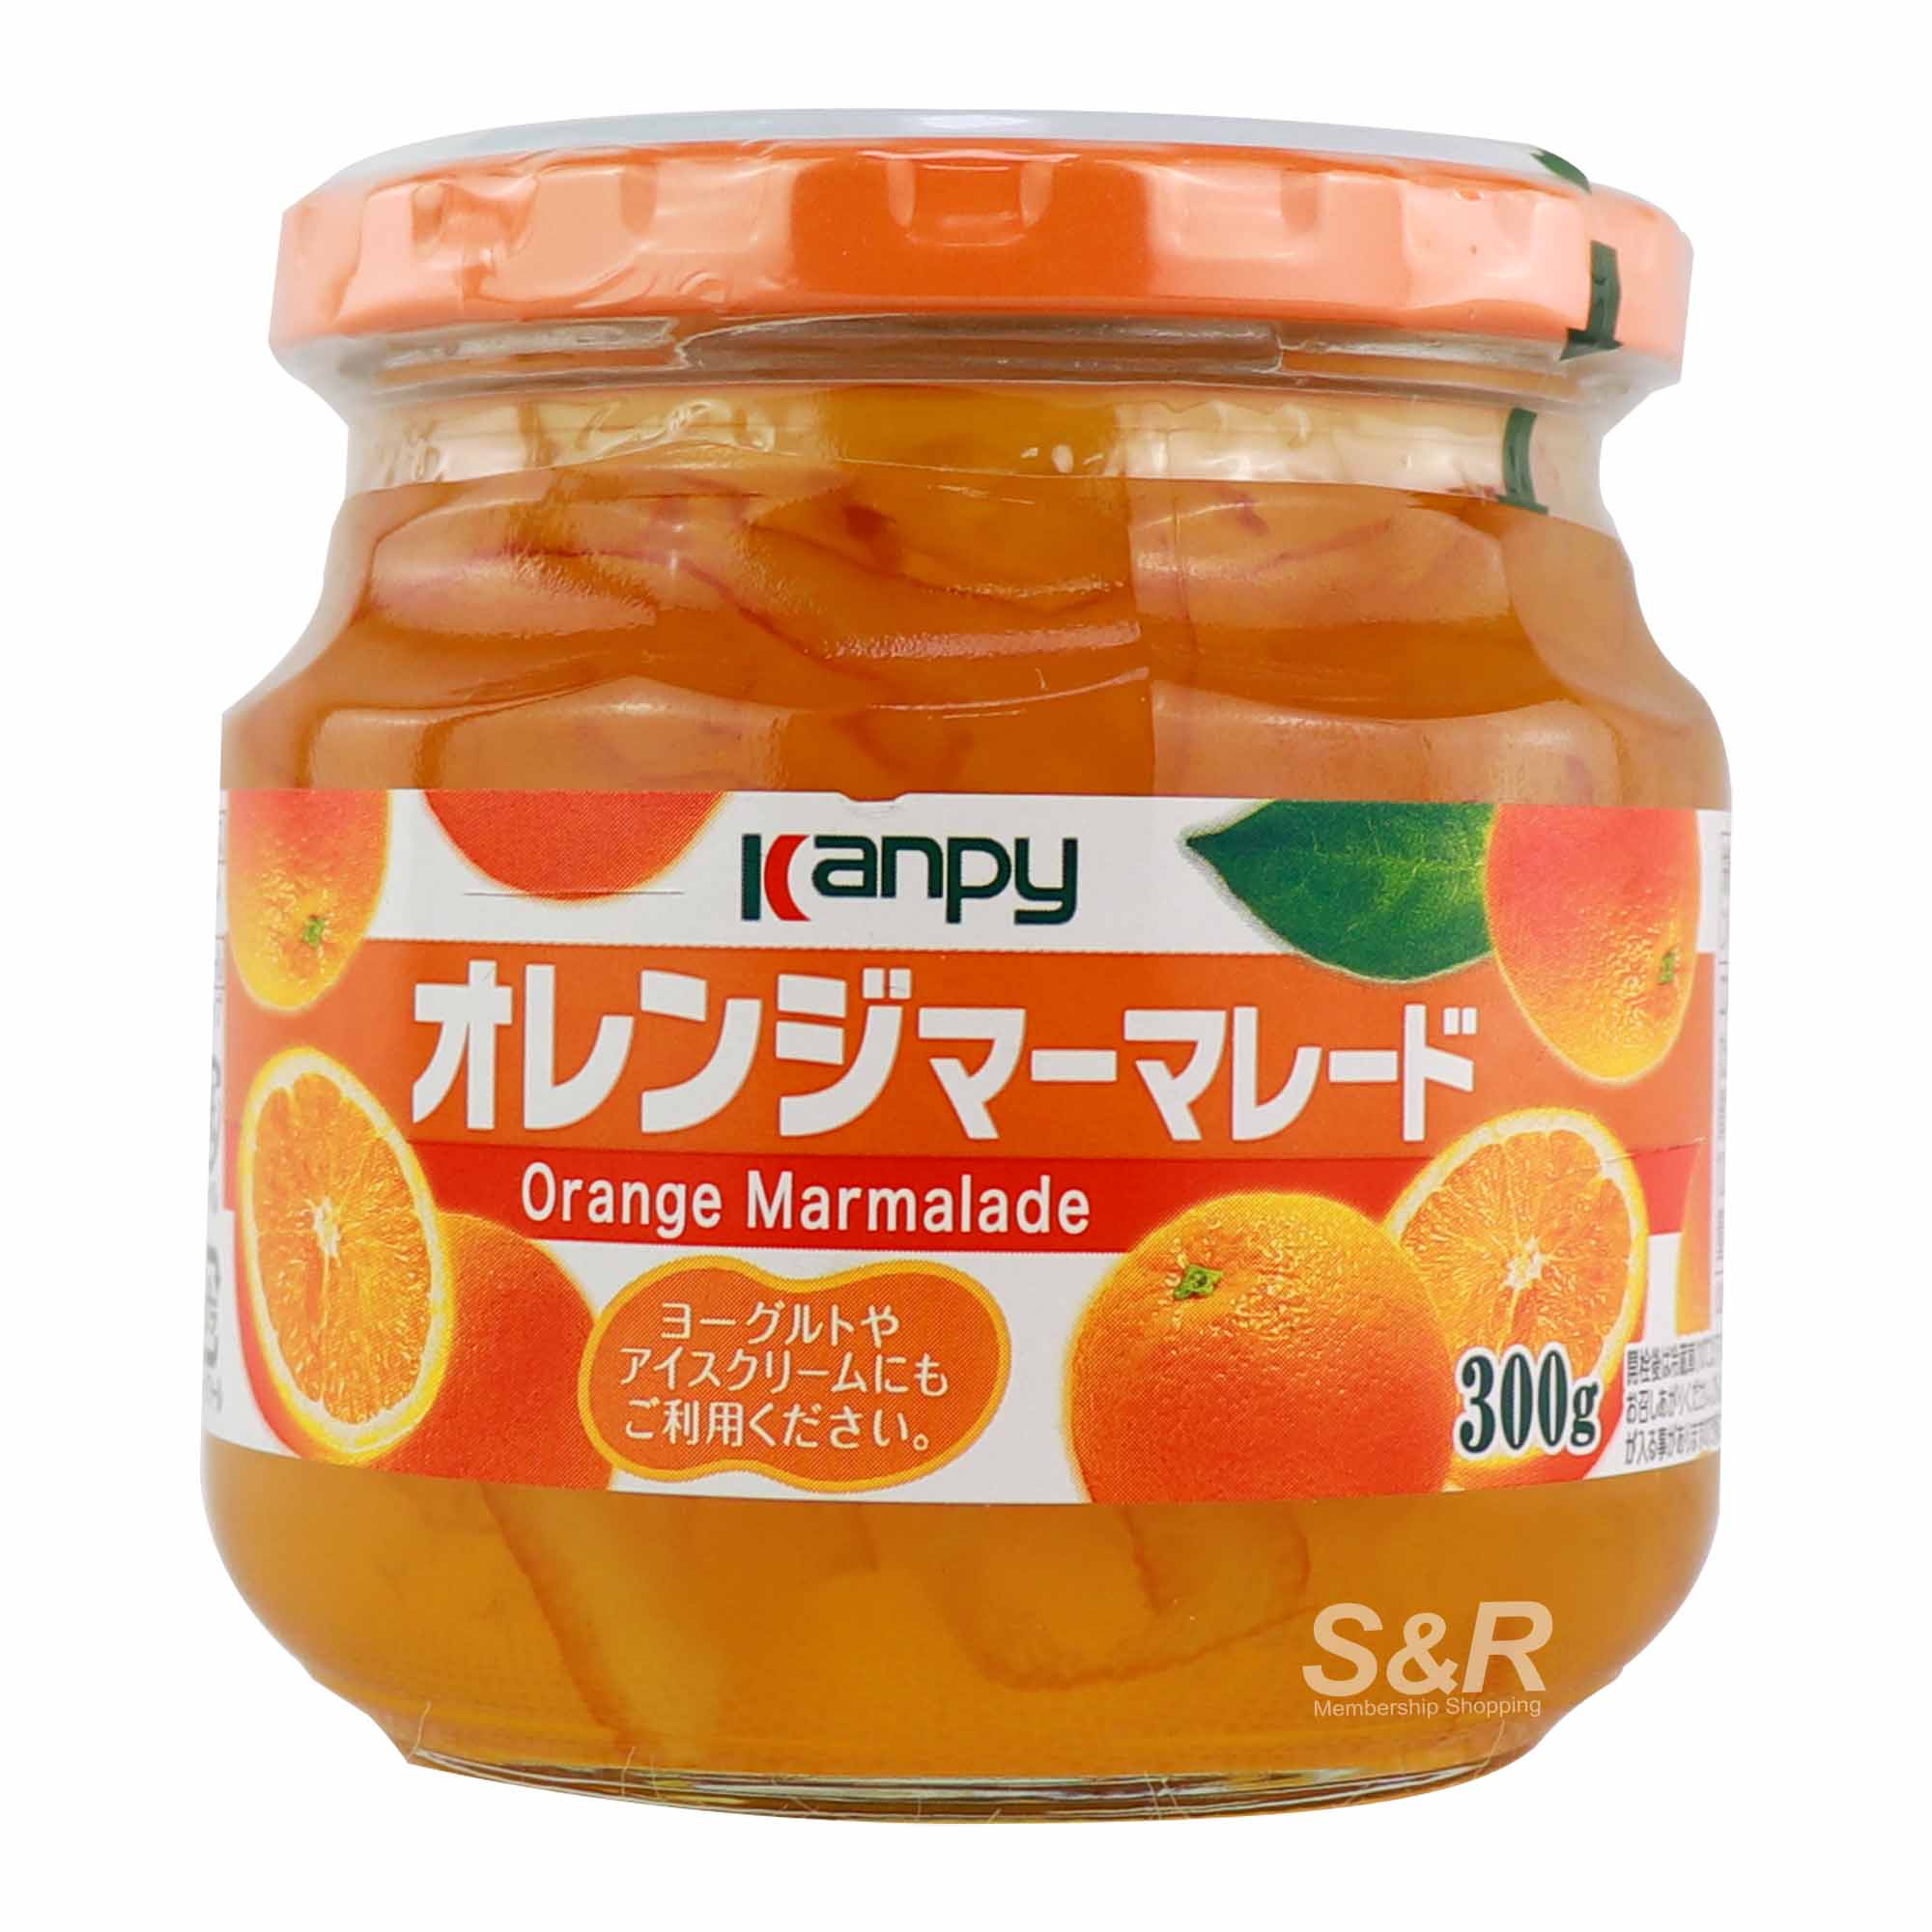 Kanpy Orange Marmalade 300g